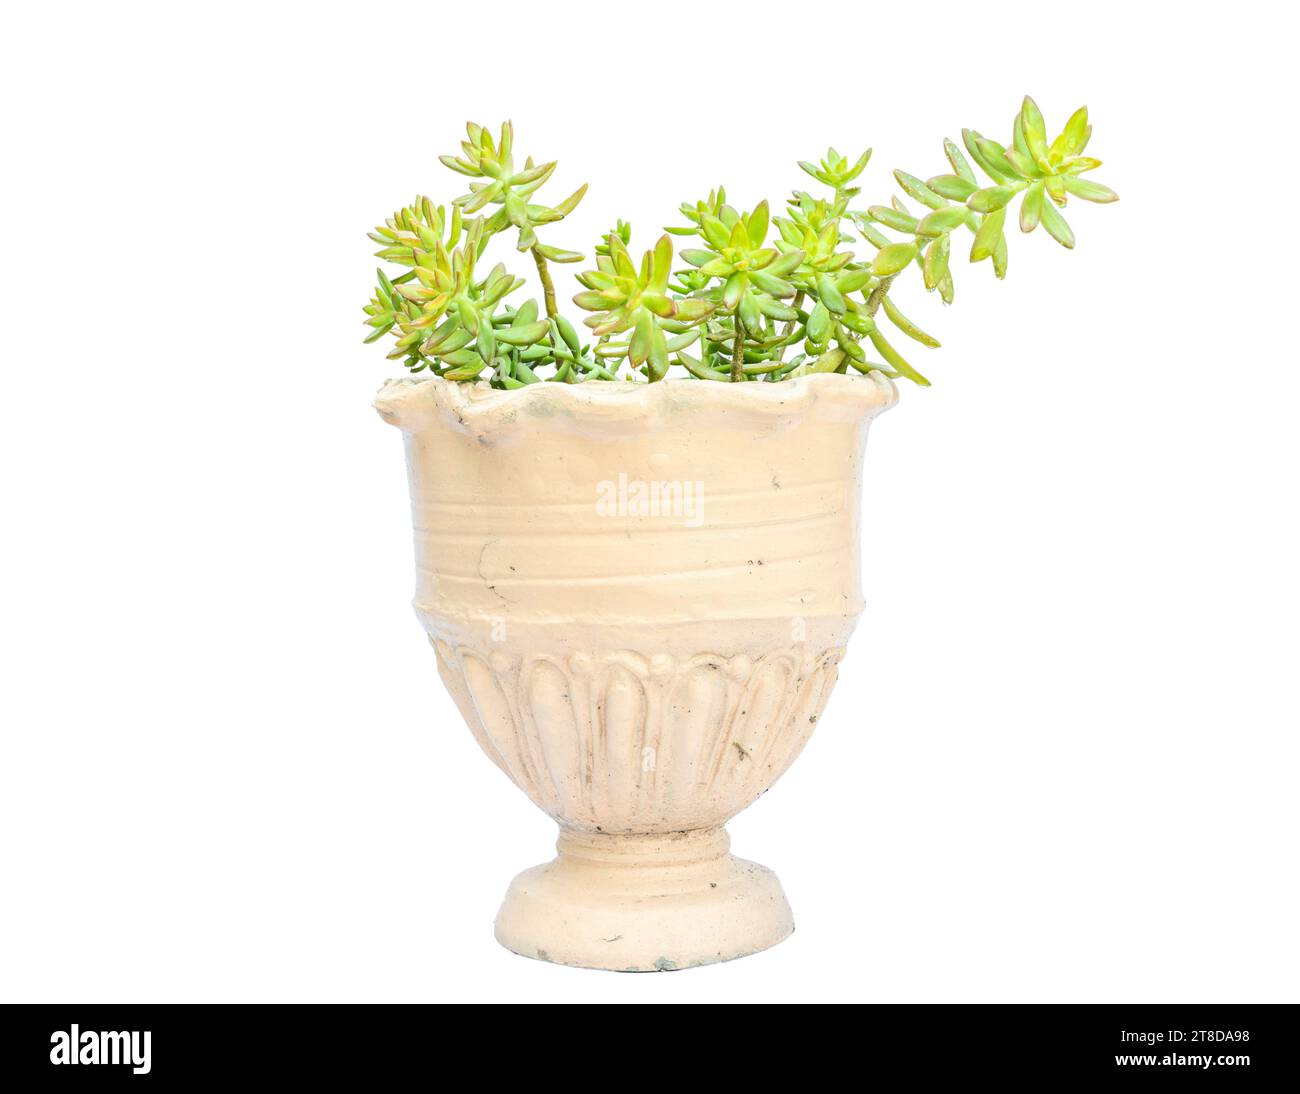 Sedum adolphi stonecrop succulent on white isolated background Stock Photo